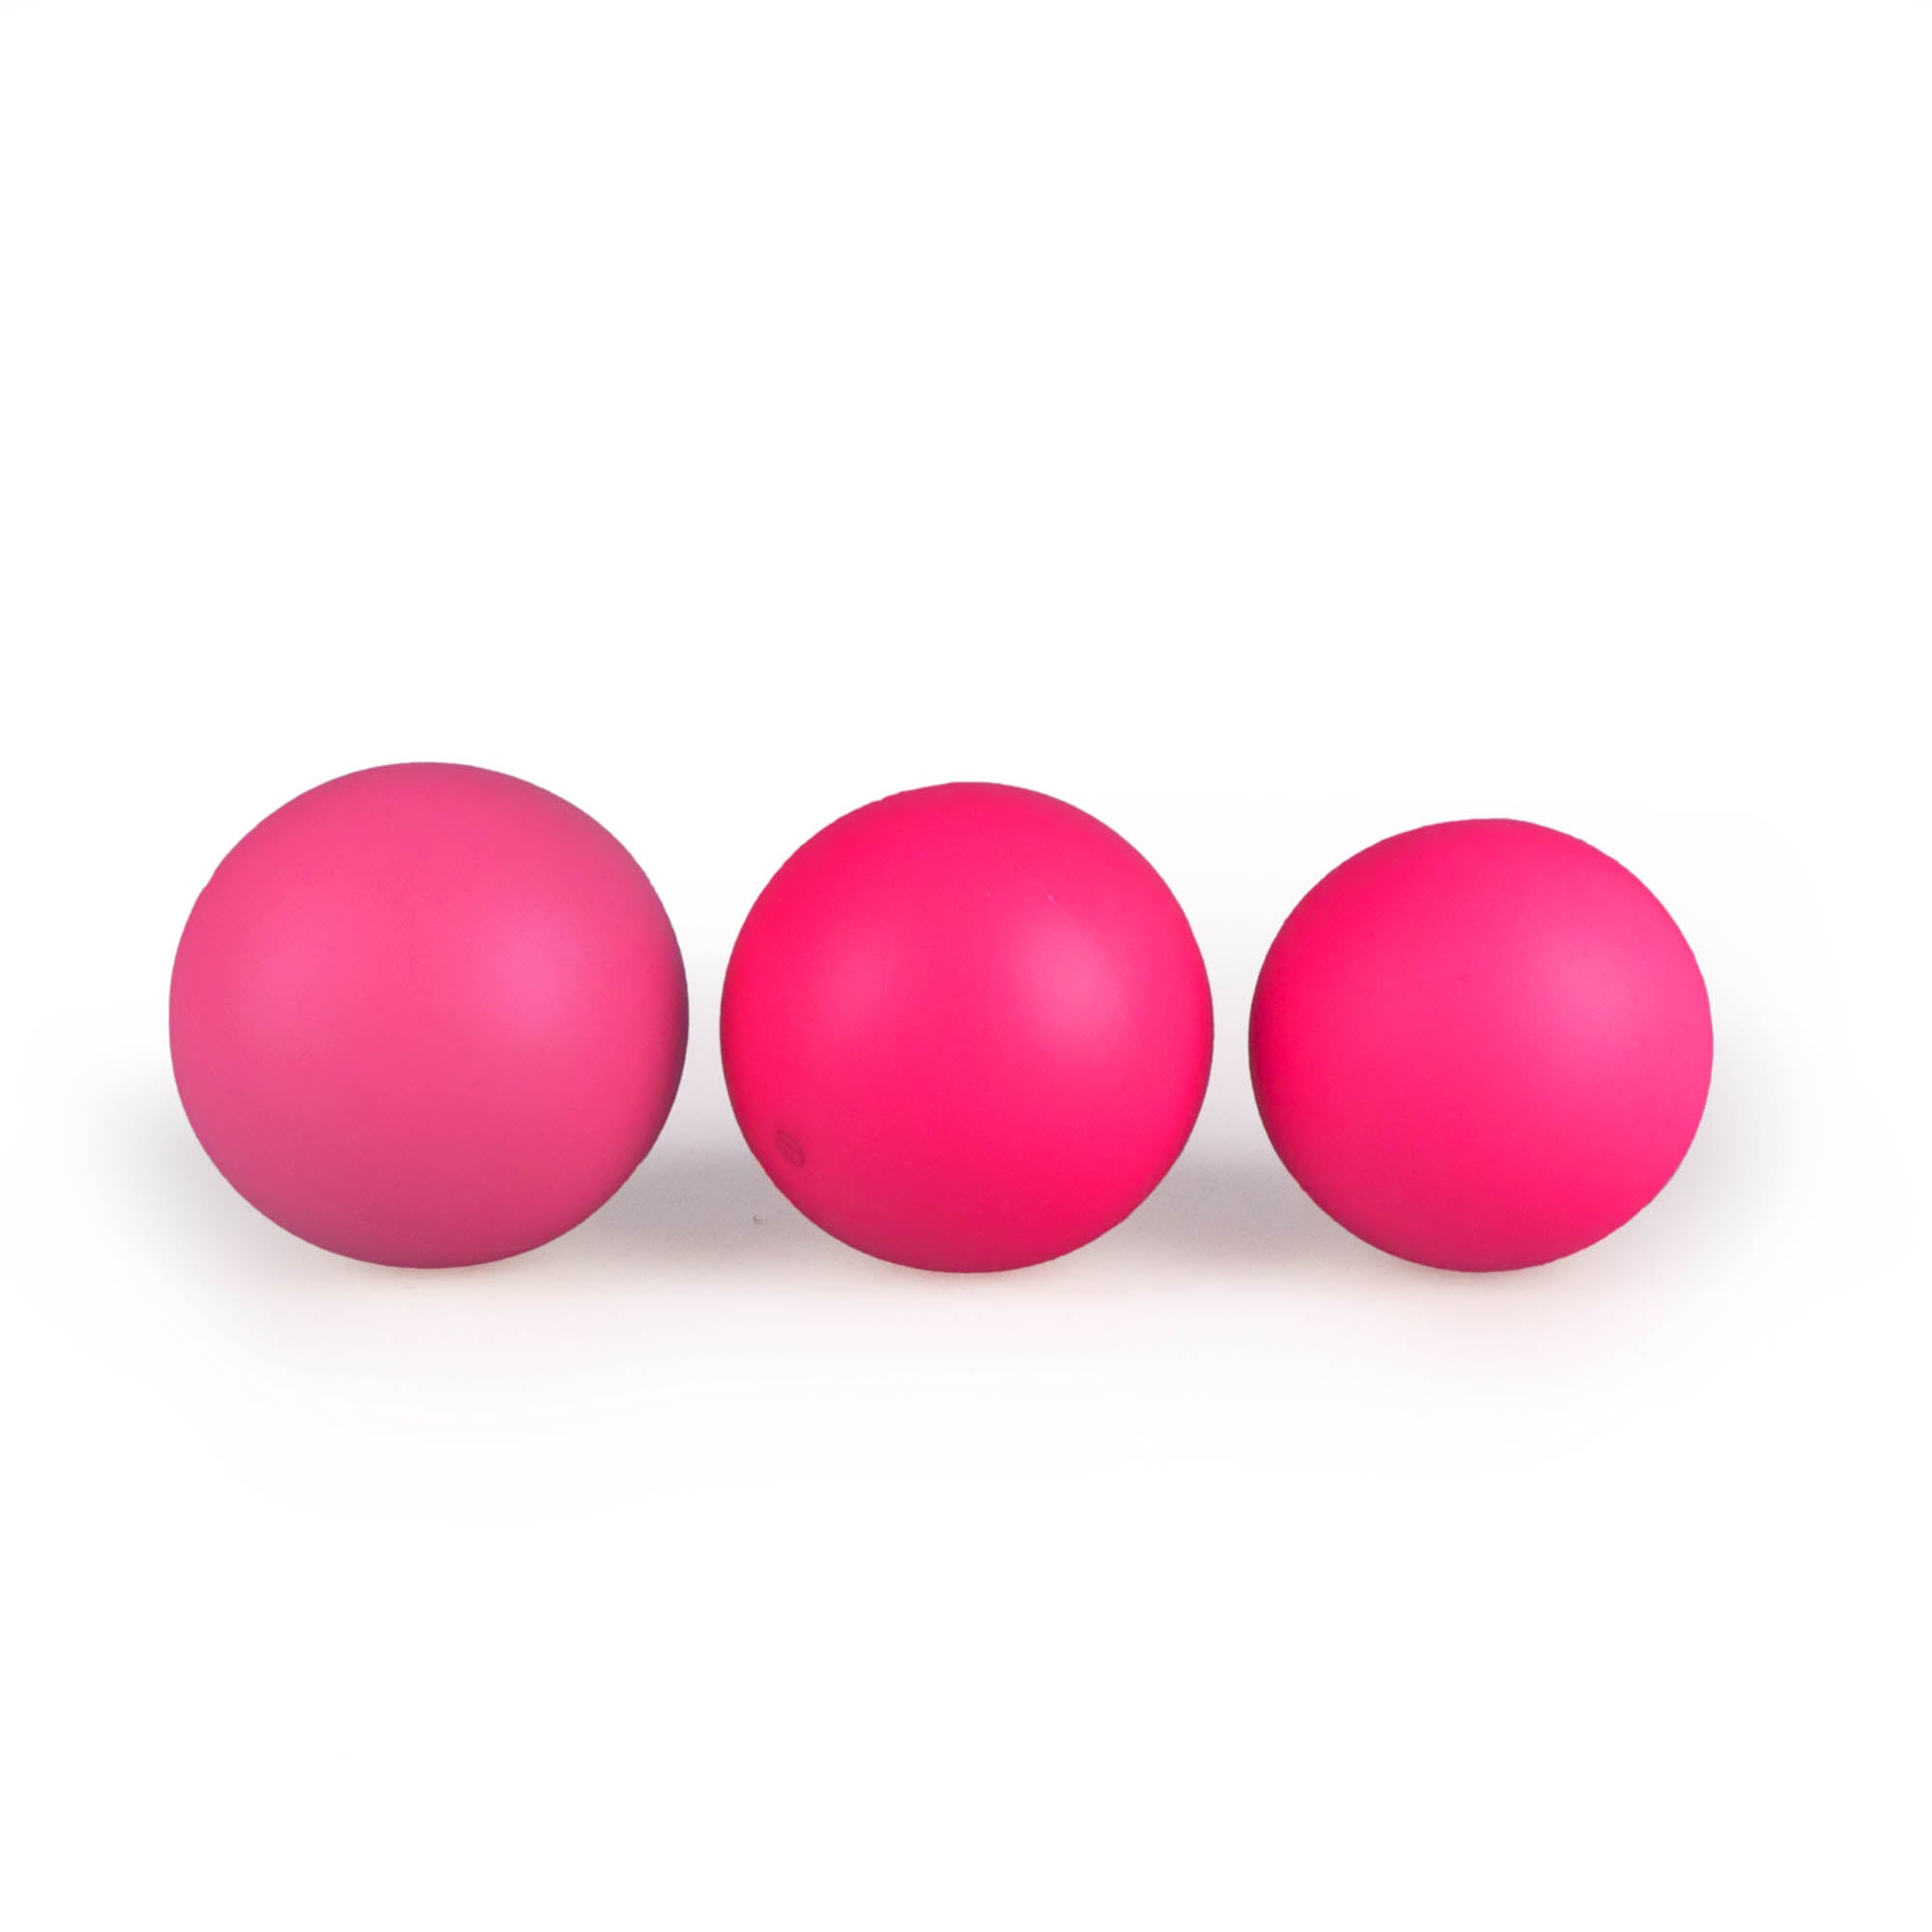 MMX juggling ball size comparison pink